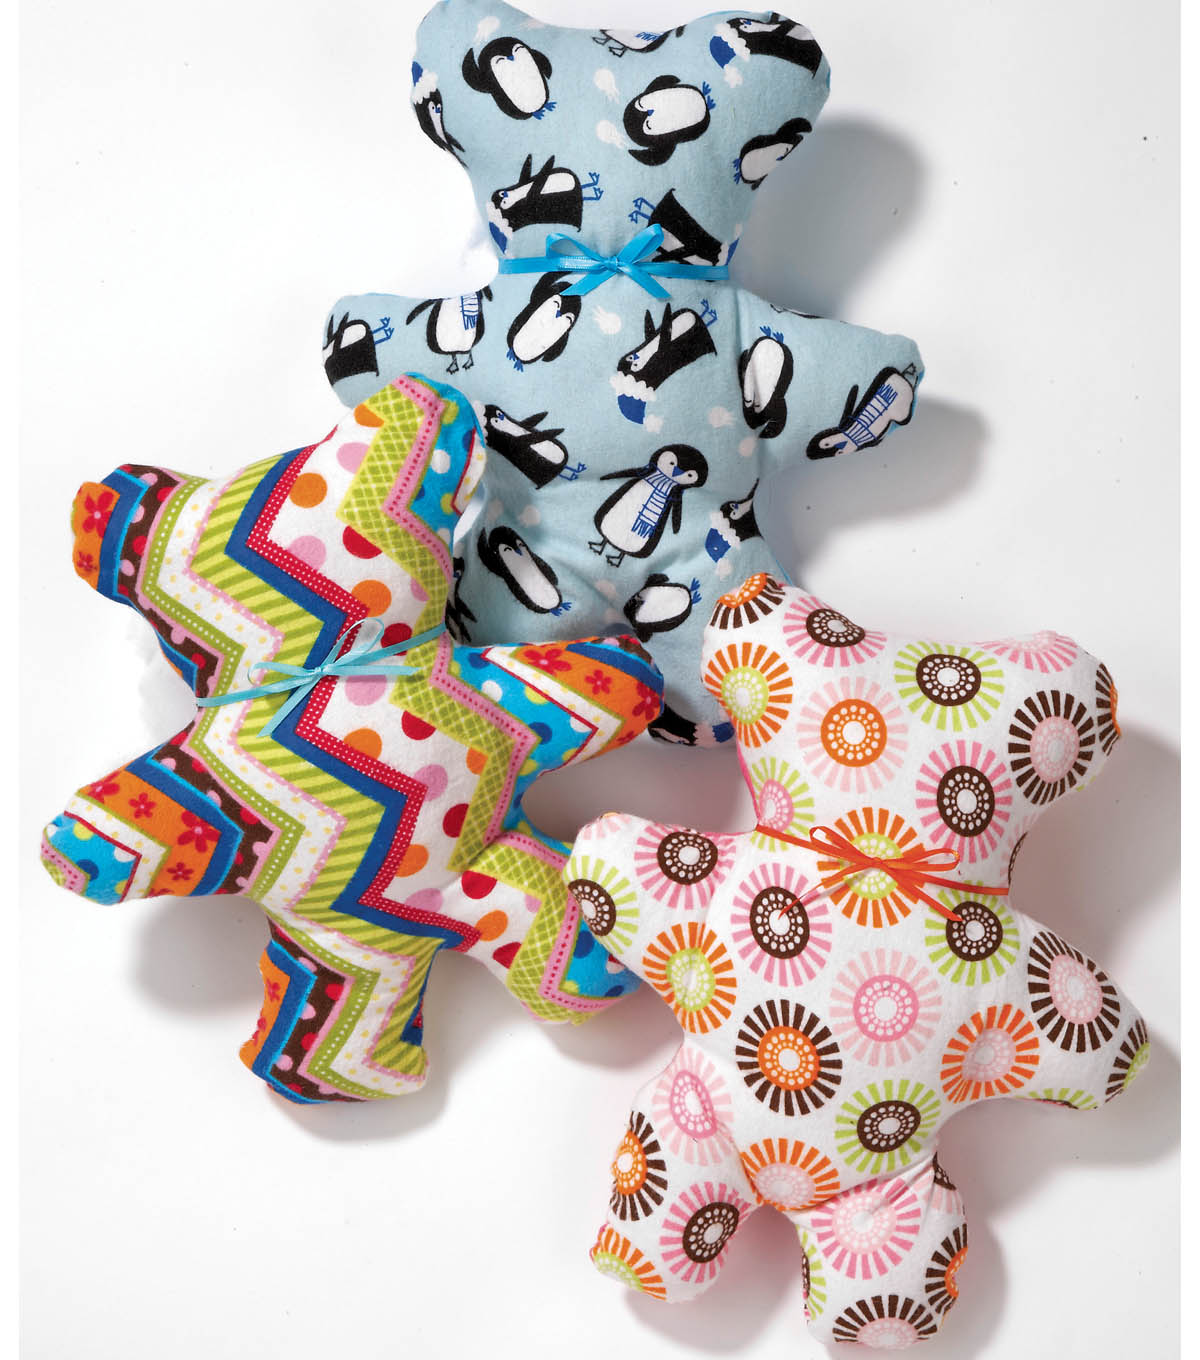 joann fabrics stuffed animals